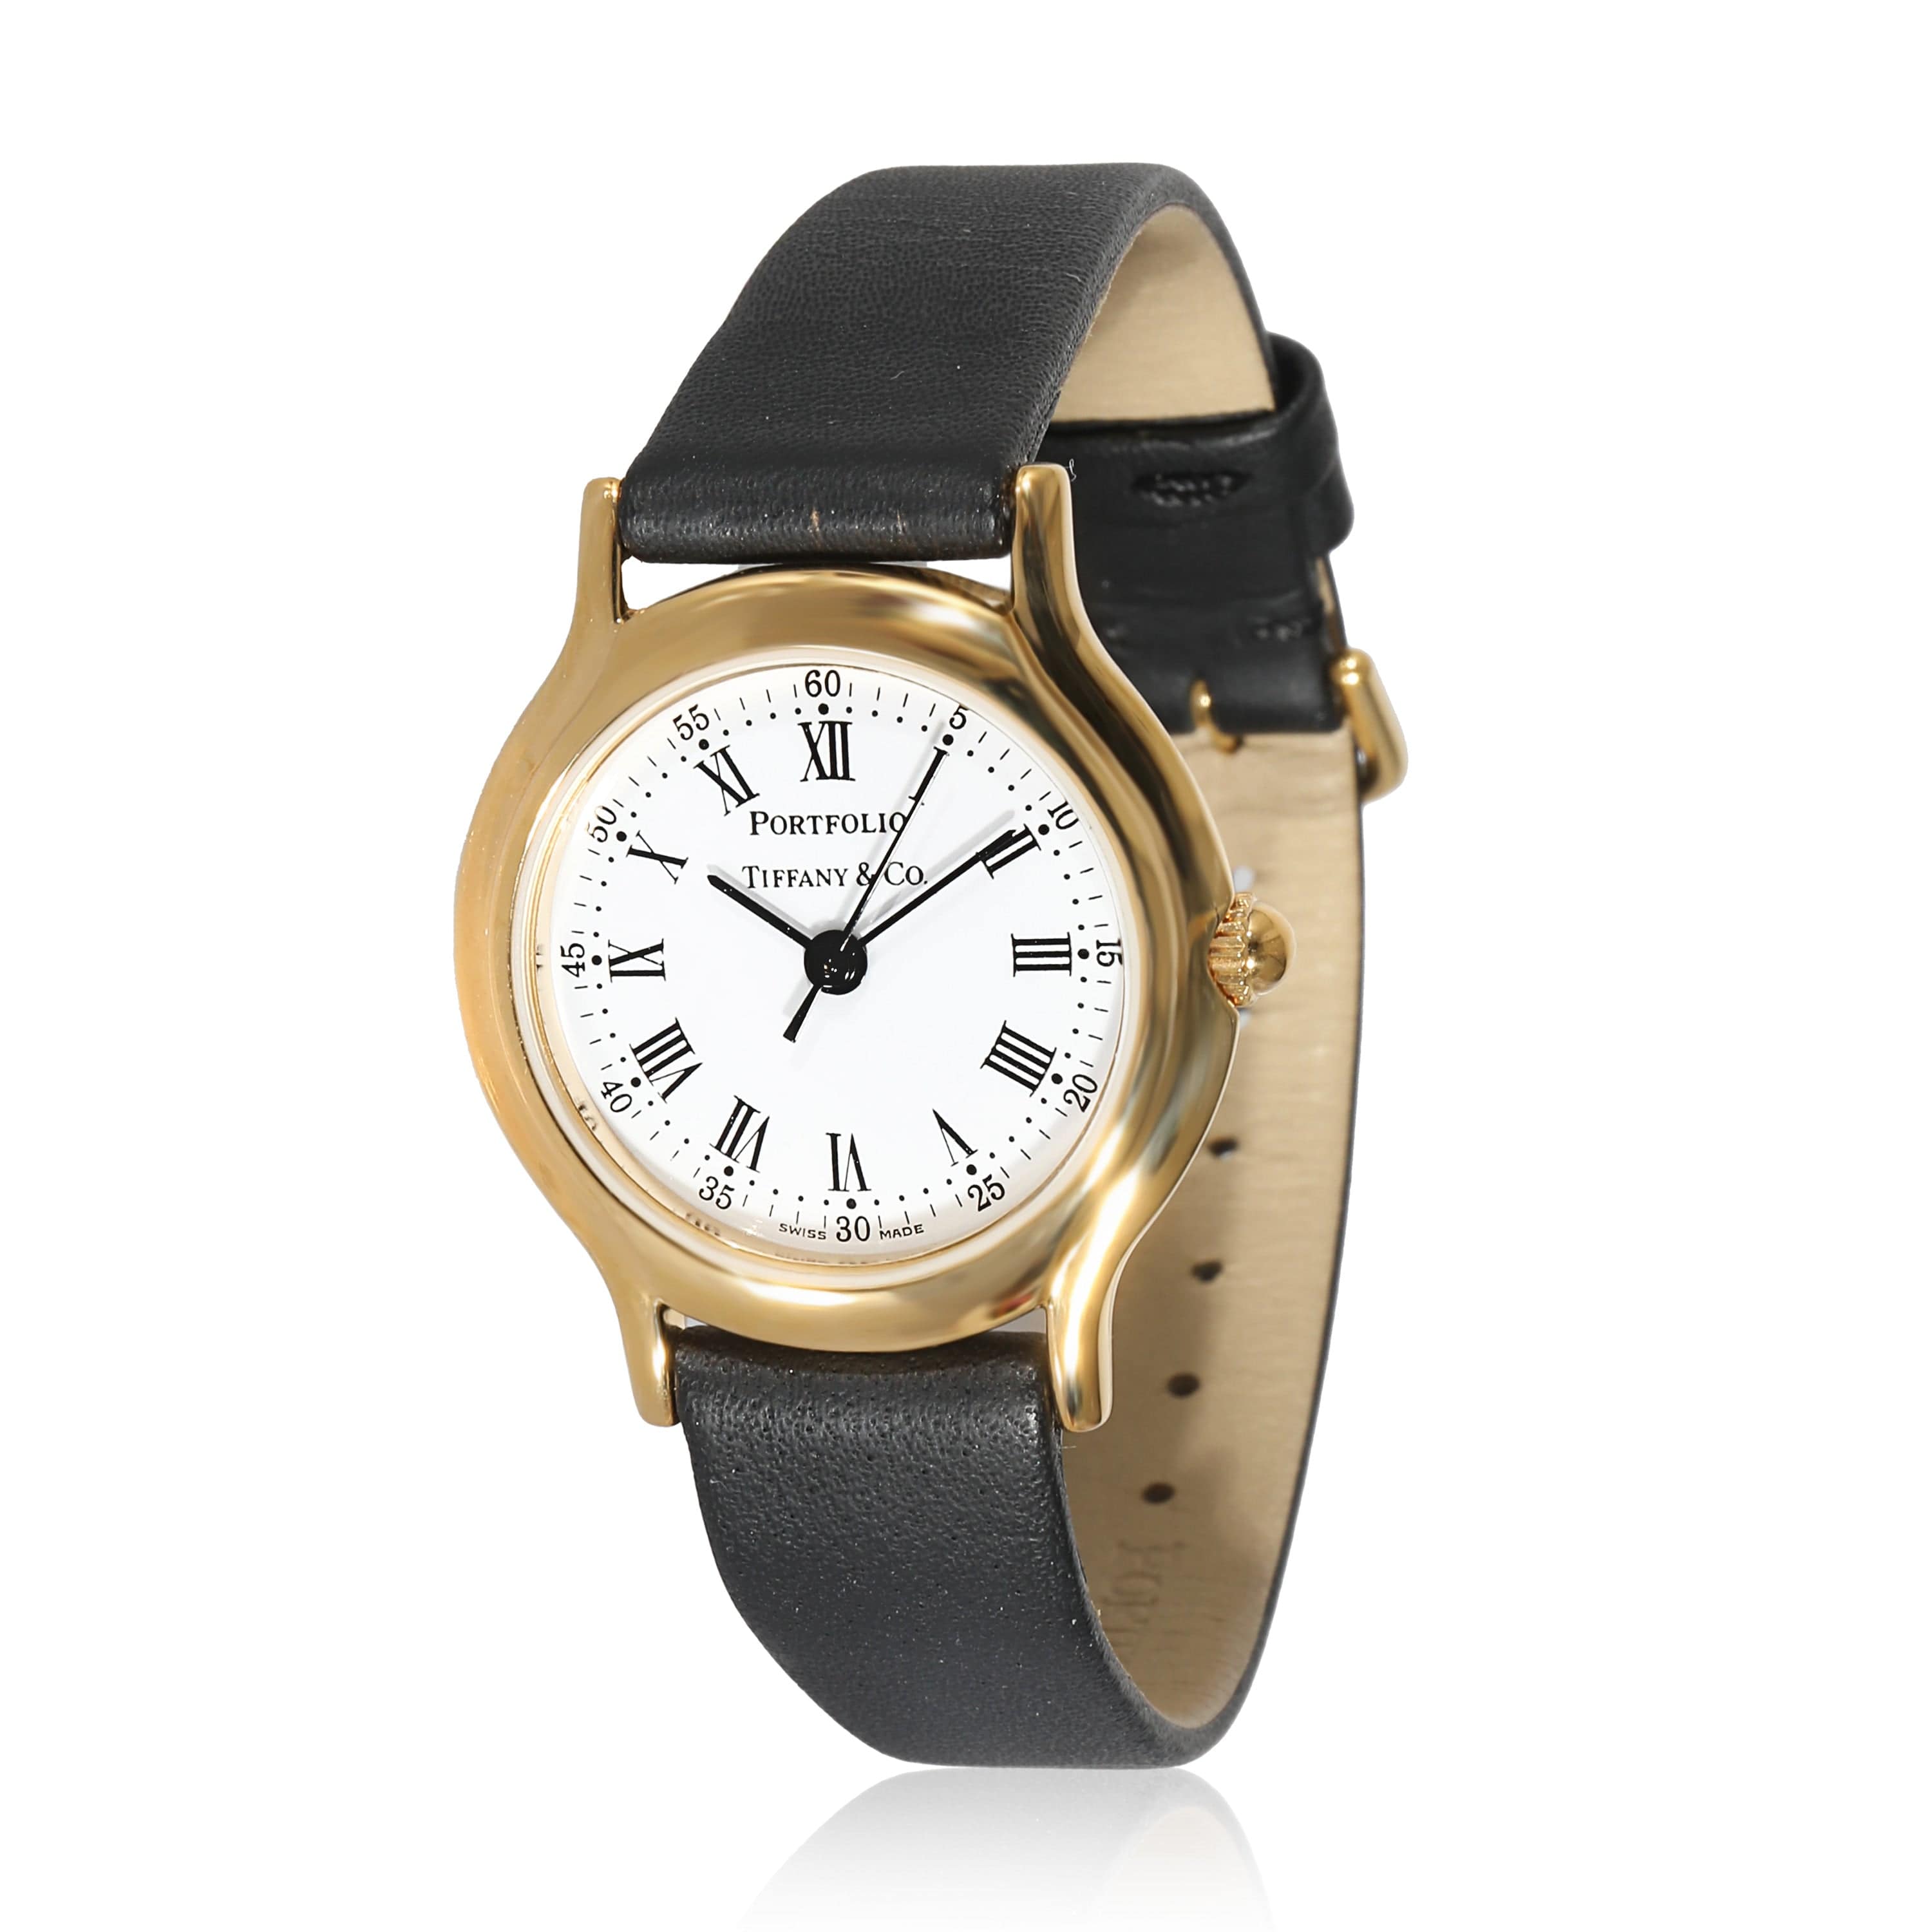 Tiffany & Co. Tiffany & Co. Portfolio Women's Gold Plate/Stainless Steel Watch